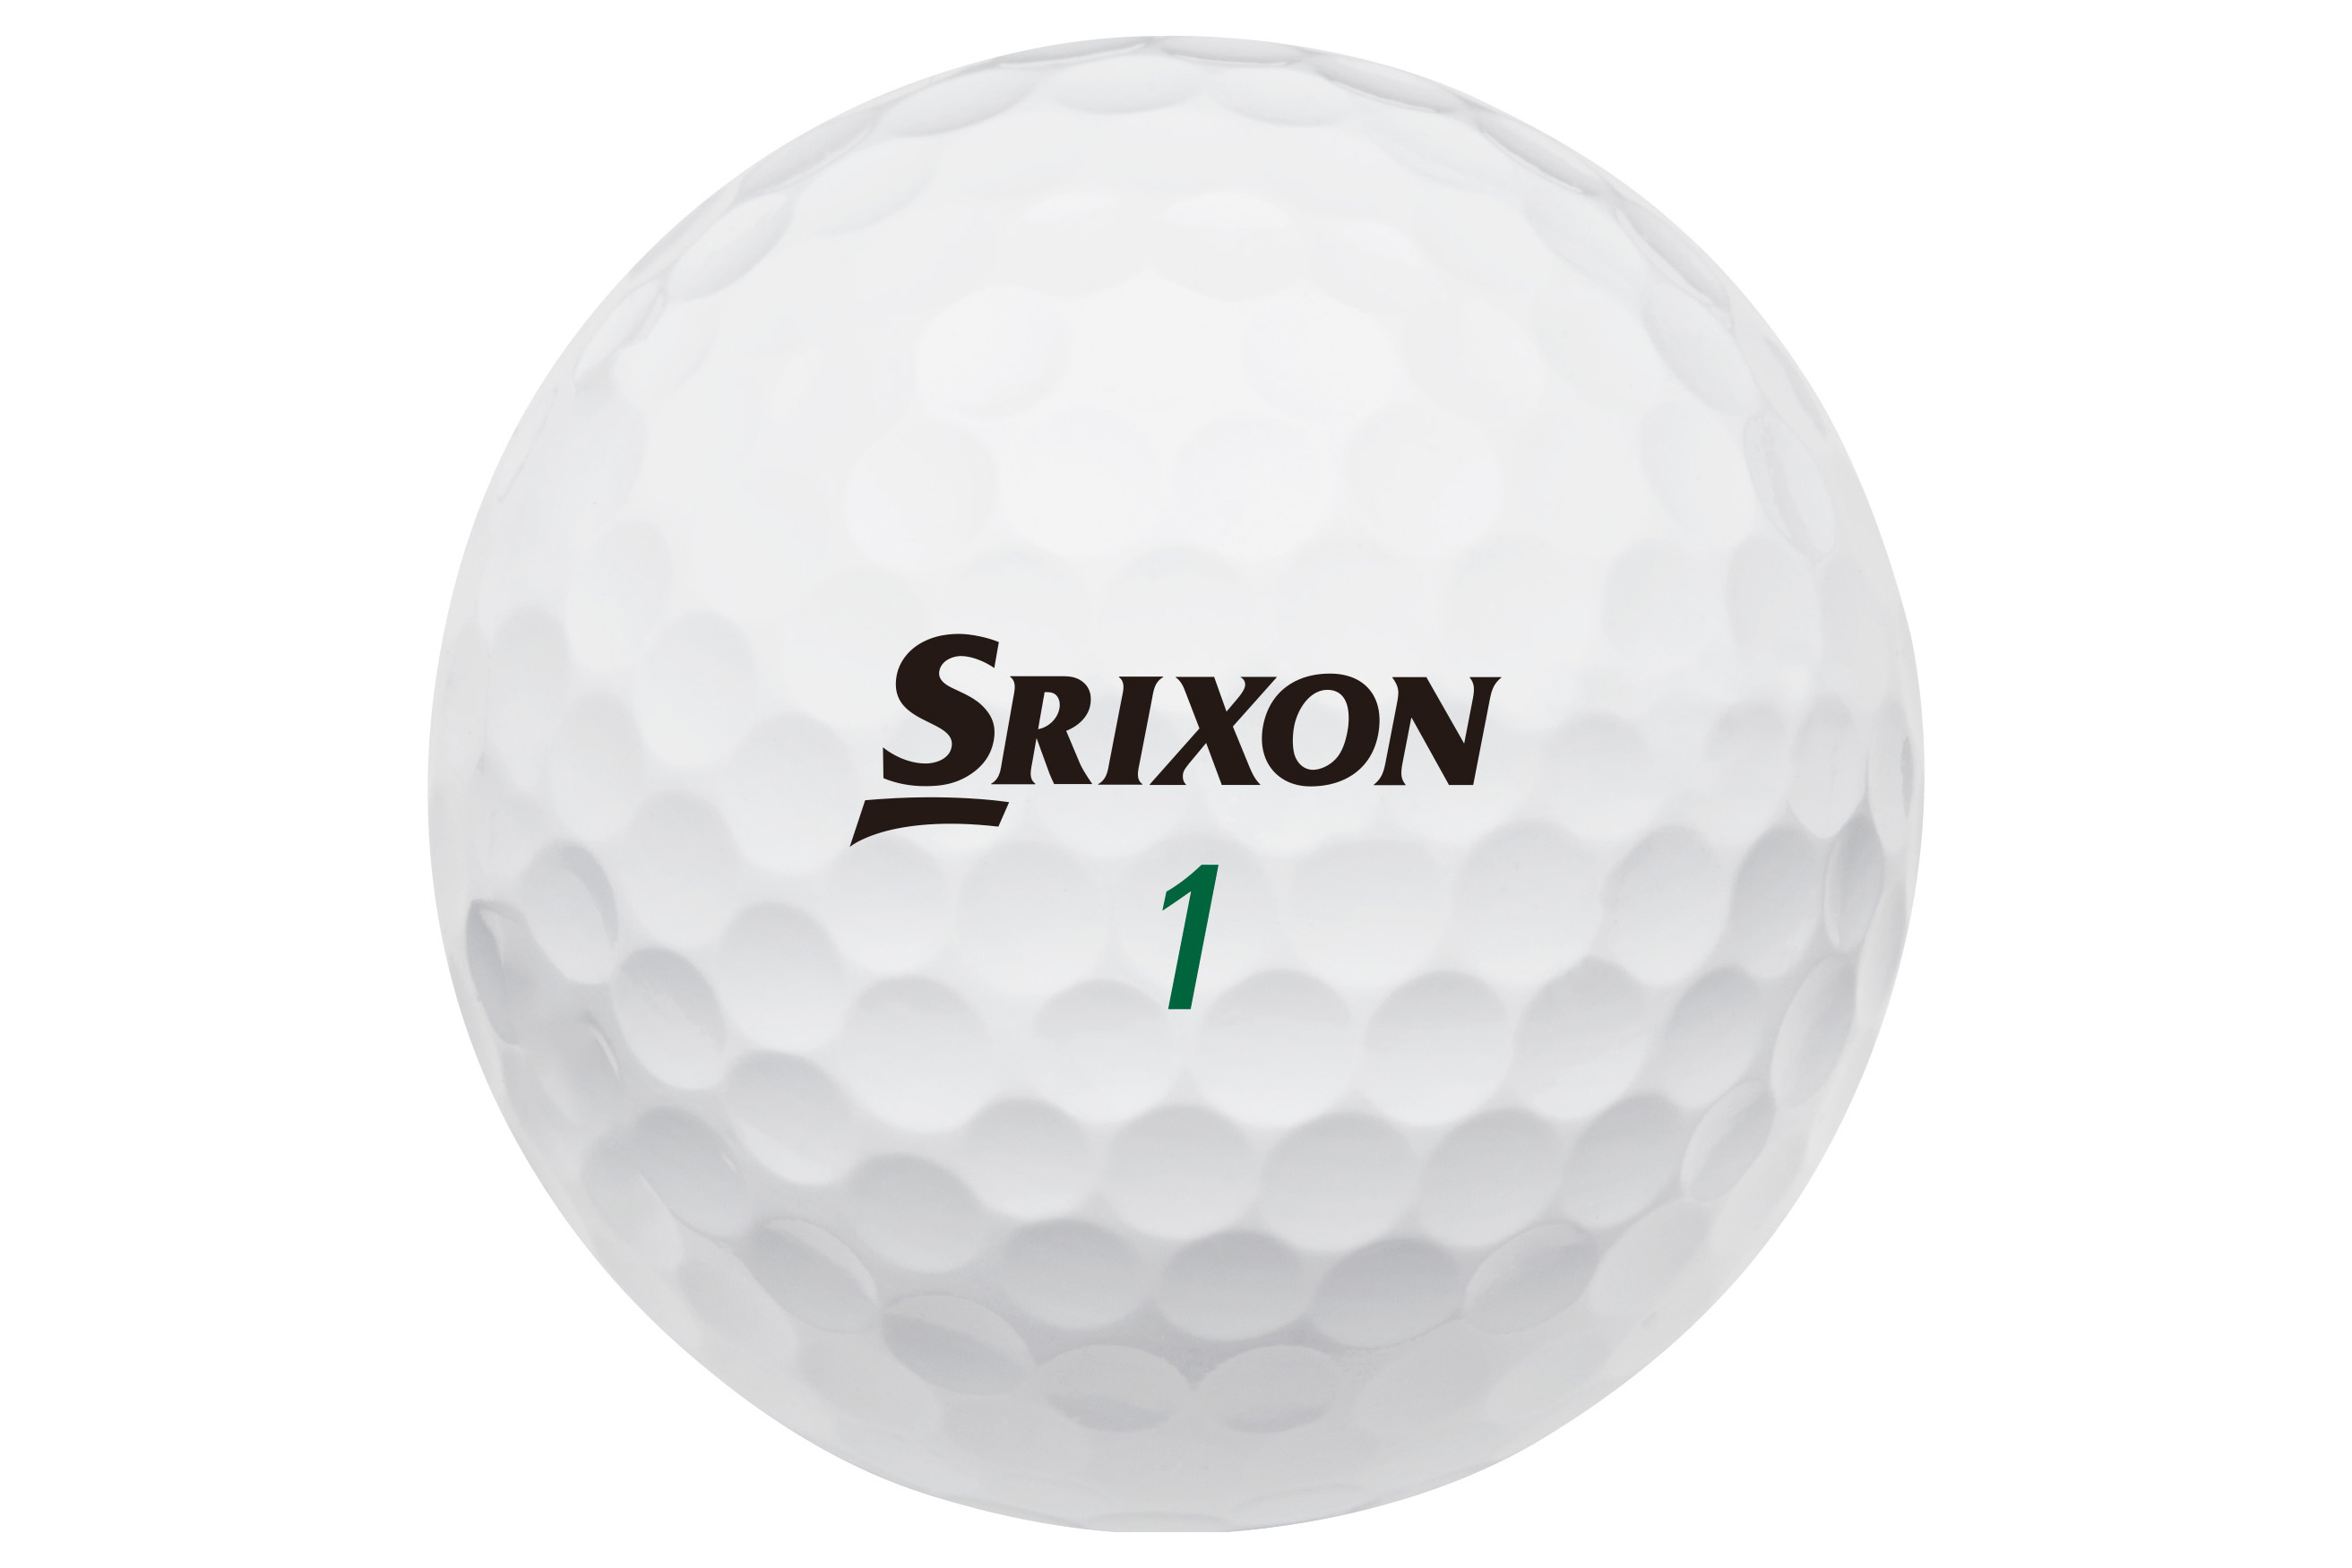 srixon golf ball reviews